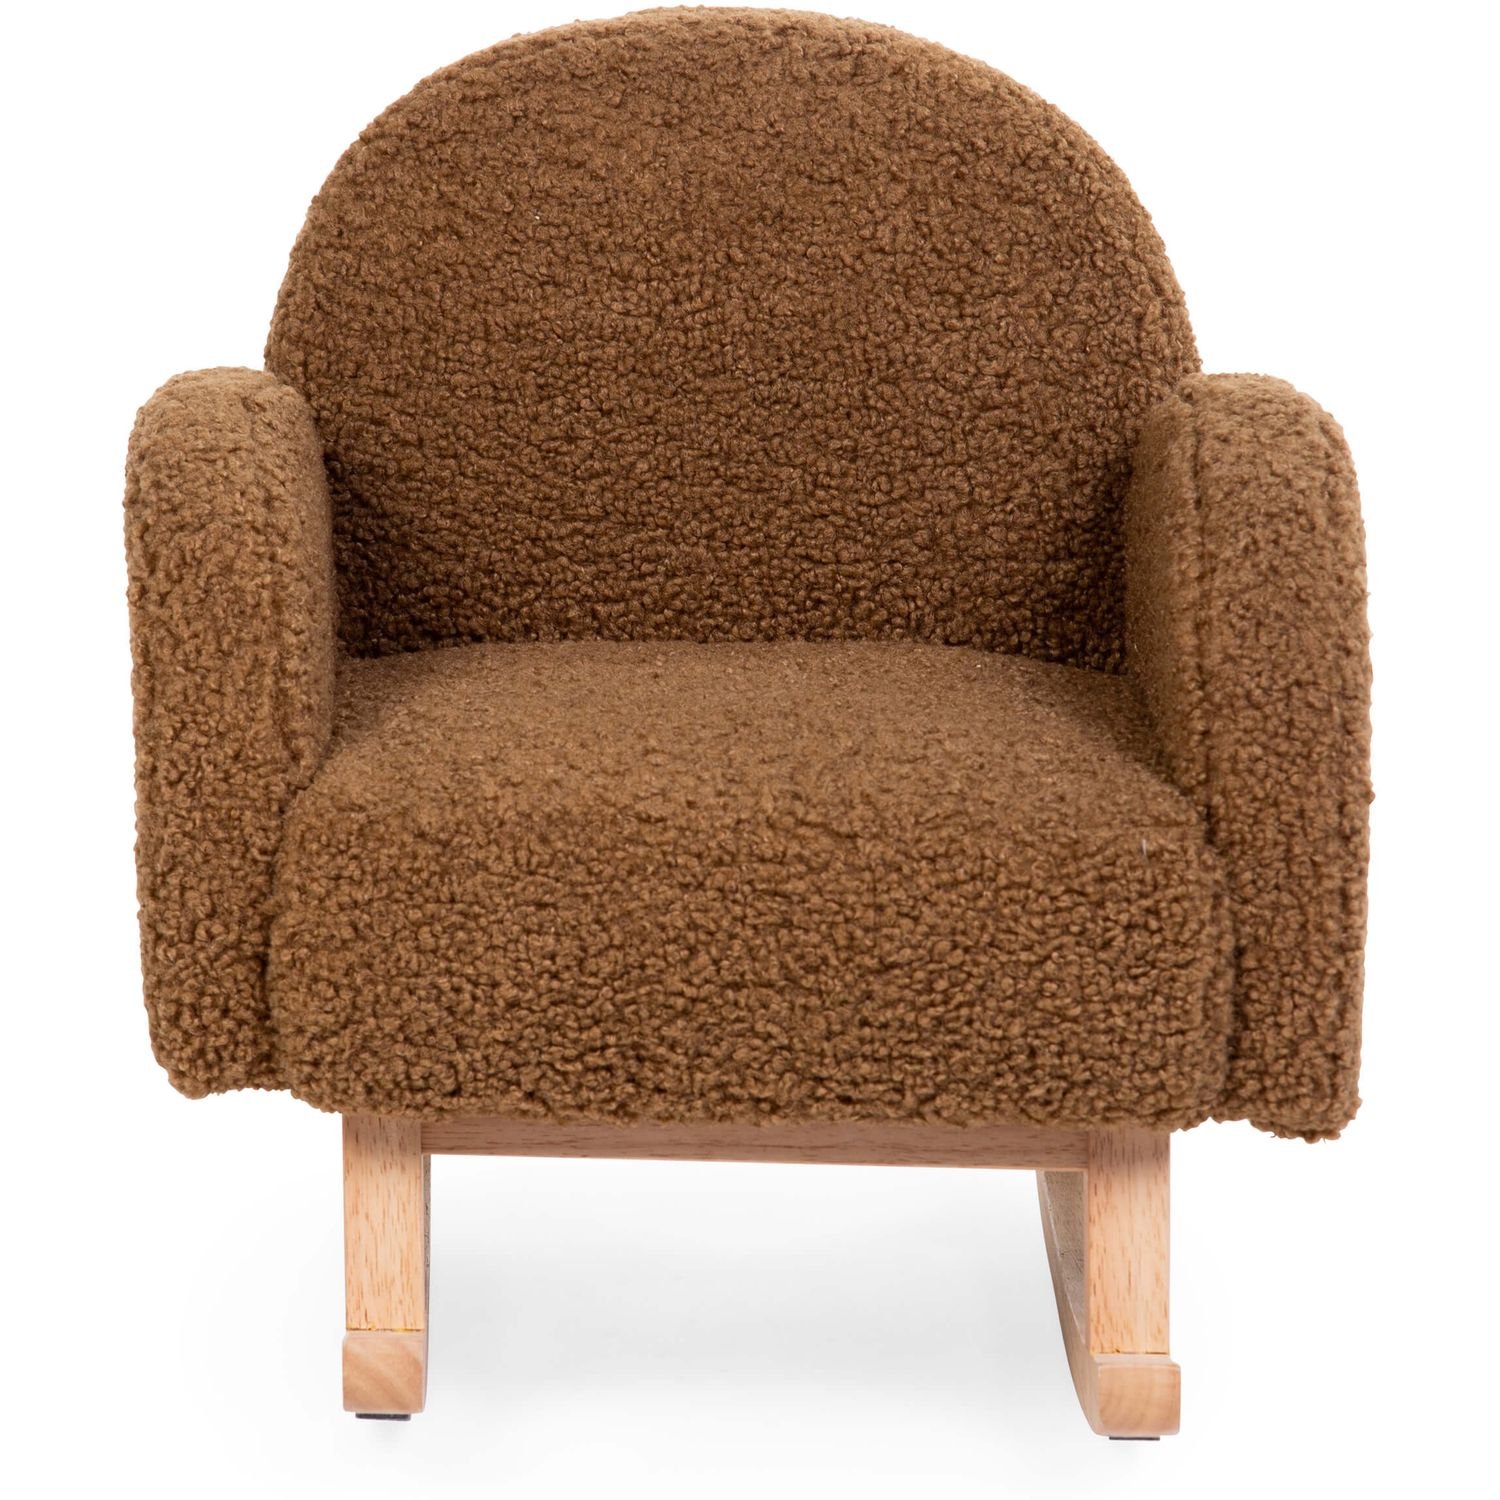 Кресло-качалка Childhome Teddy brown, коричневое (RCKTOB) - фото 3